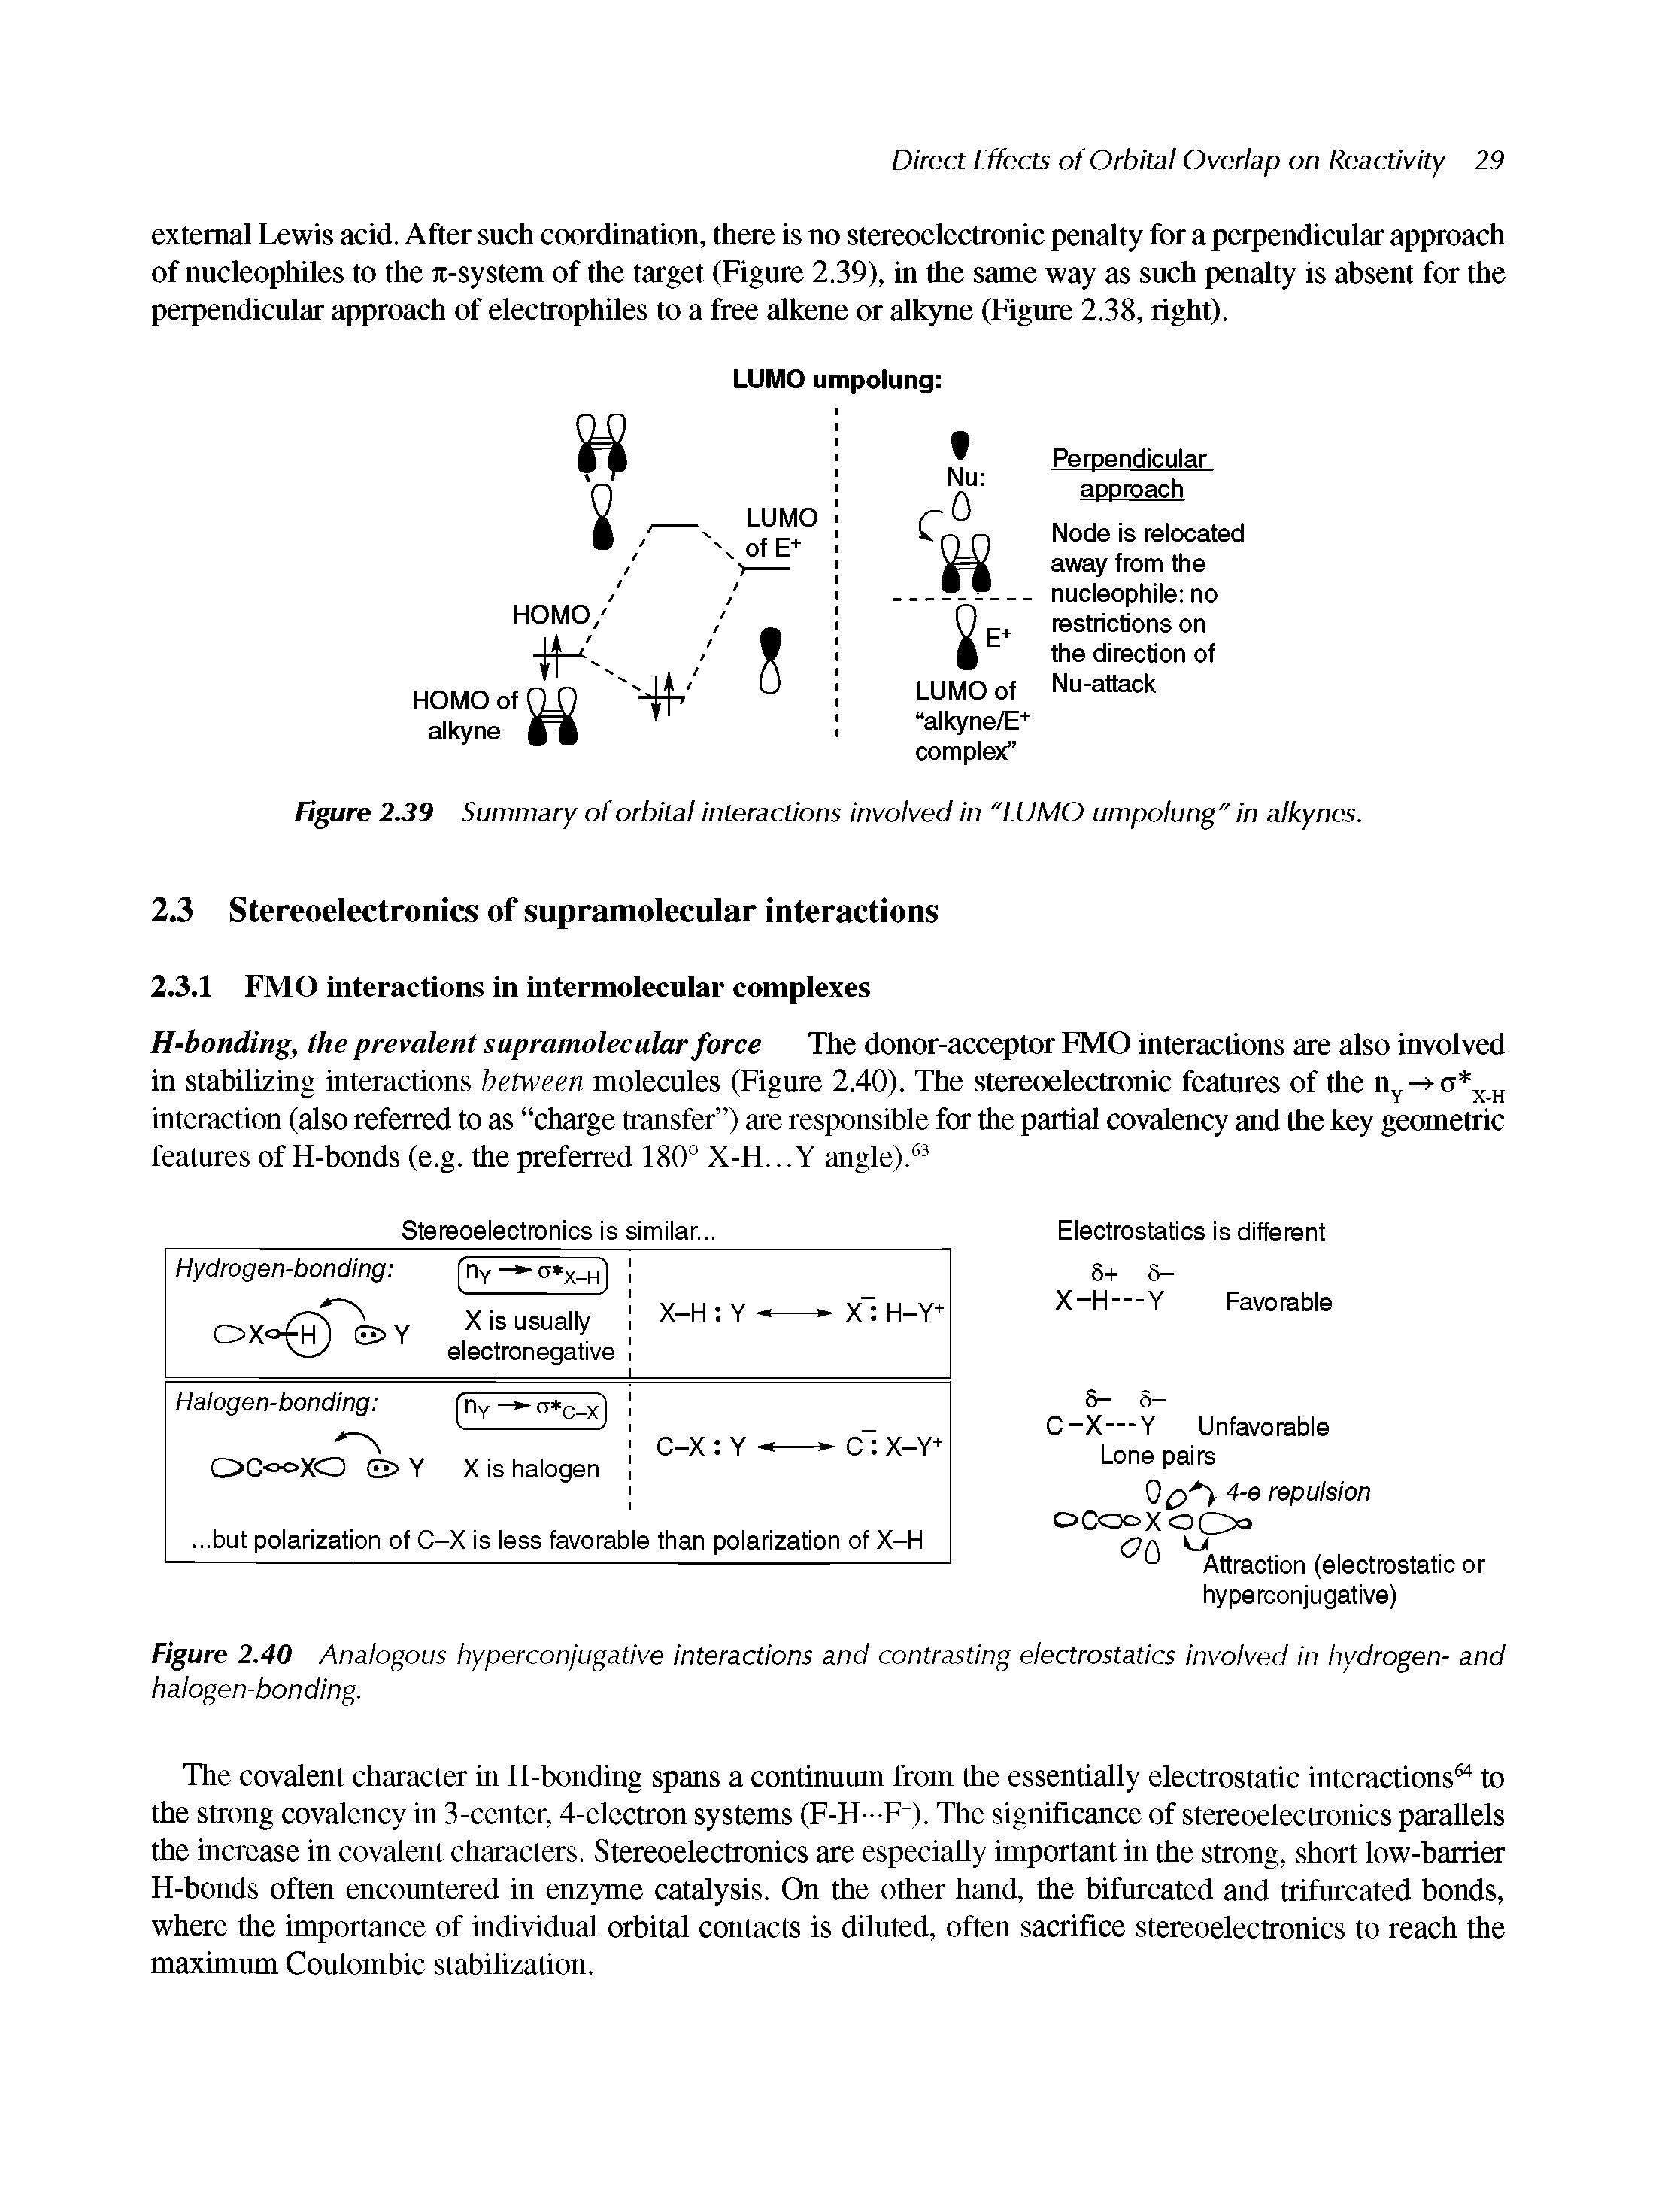 Figure 2.39 Summary of orbital interactions involved in "LUMO umpolung" in alkynes.